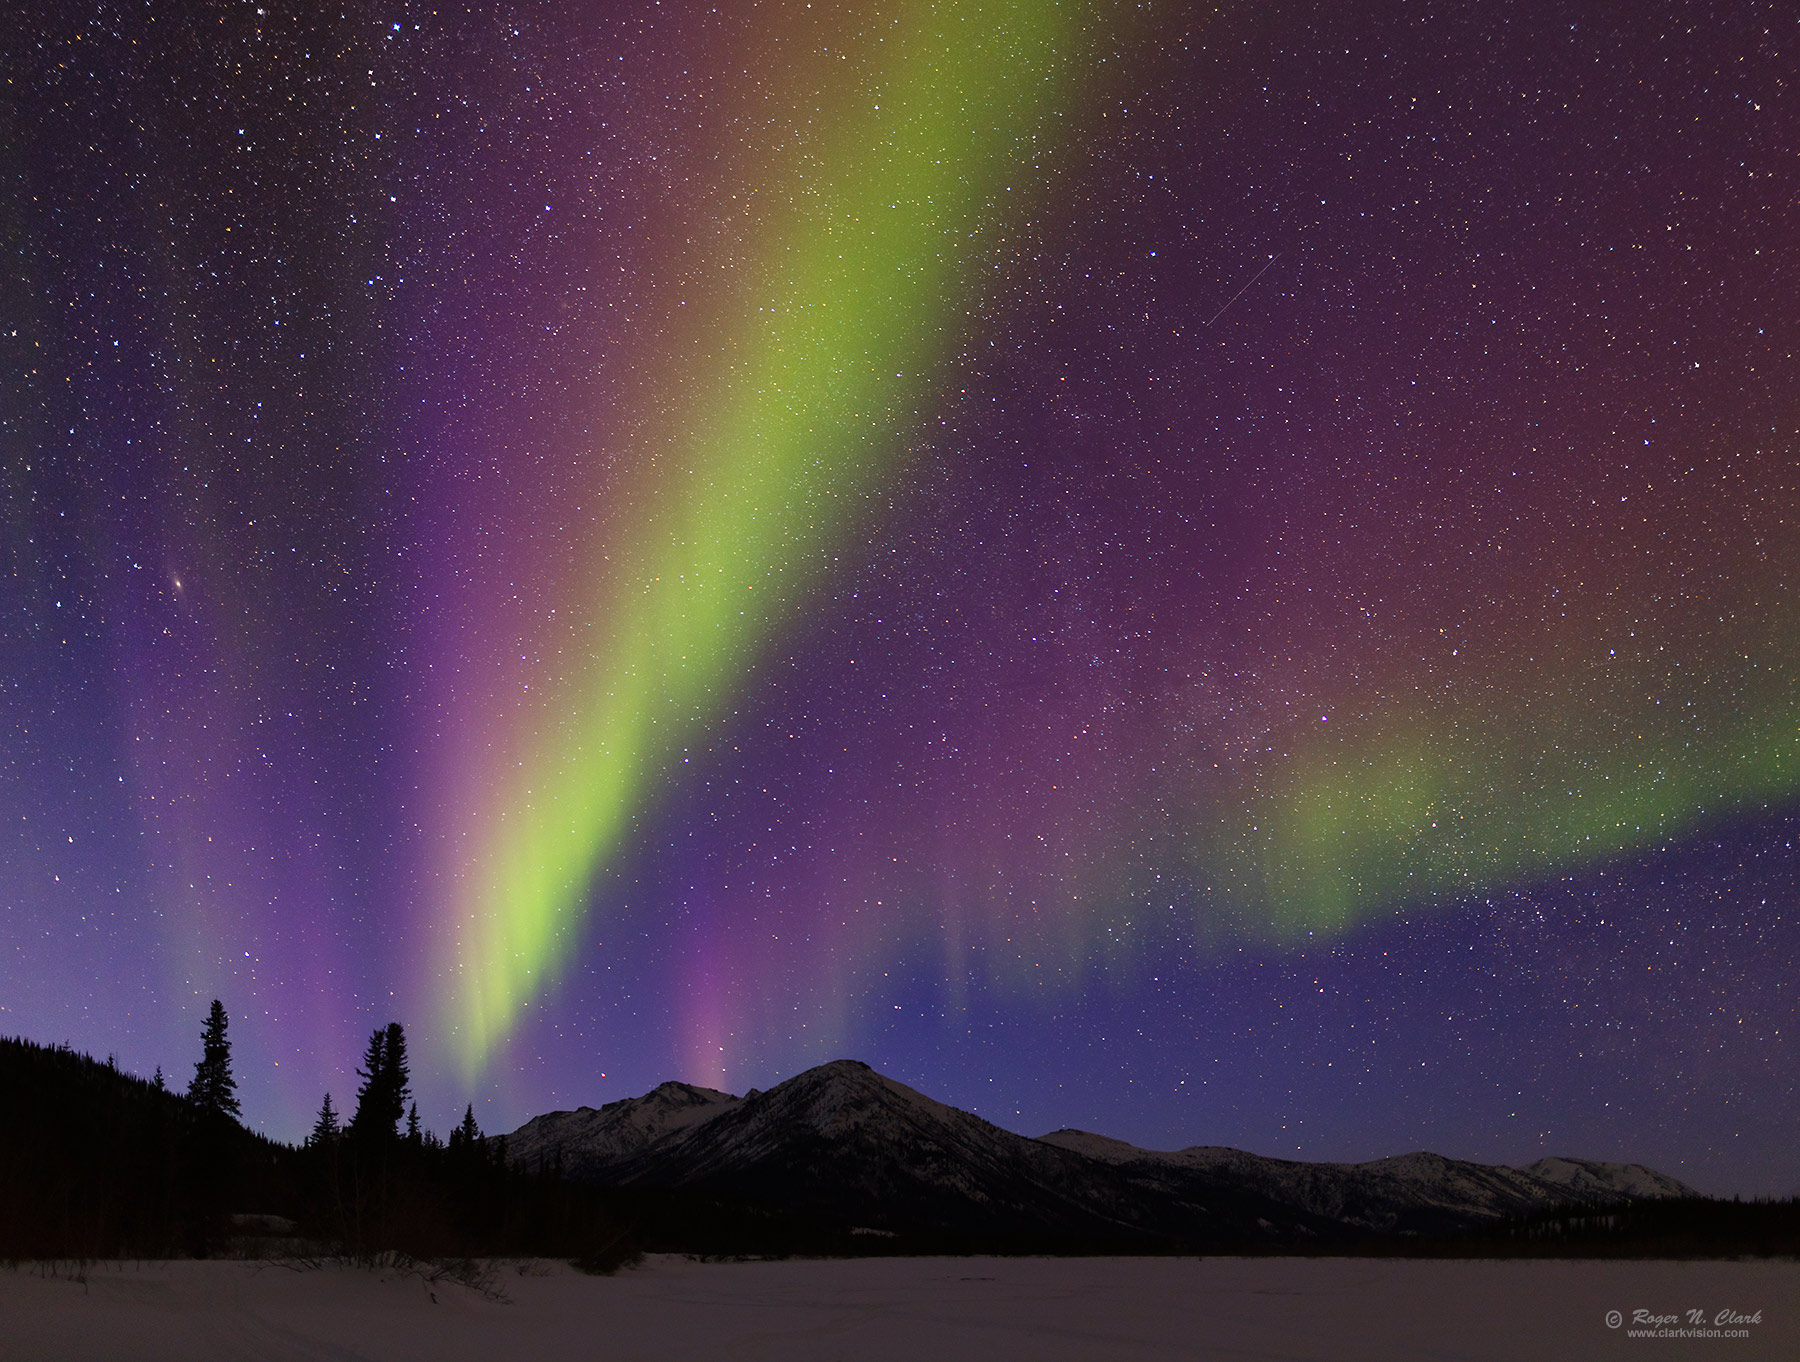 image aurora-c03.21-22.2022-alaska-rnclark-4C3A5028.c-1800s.jpg is Copyrighted by Roger N. Clark, www.clarkvision.com